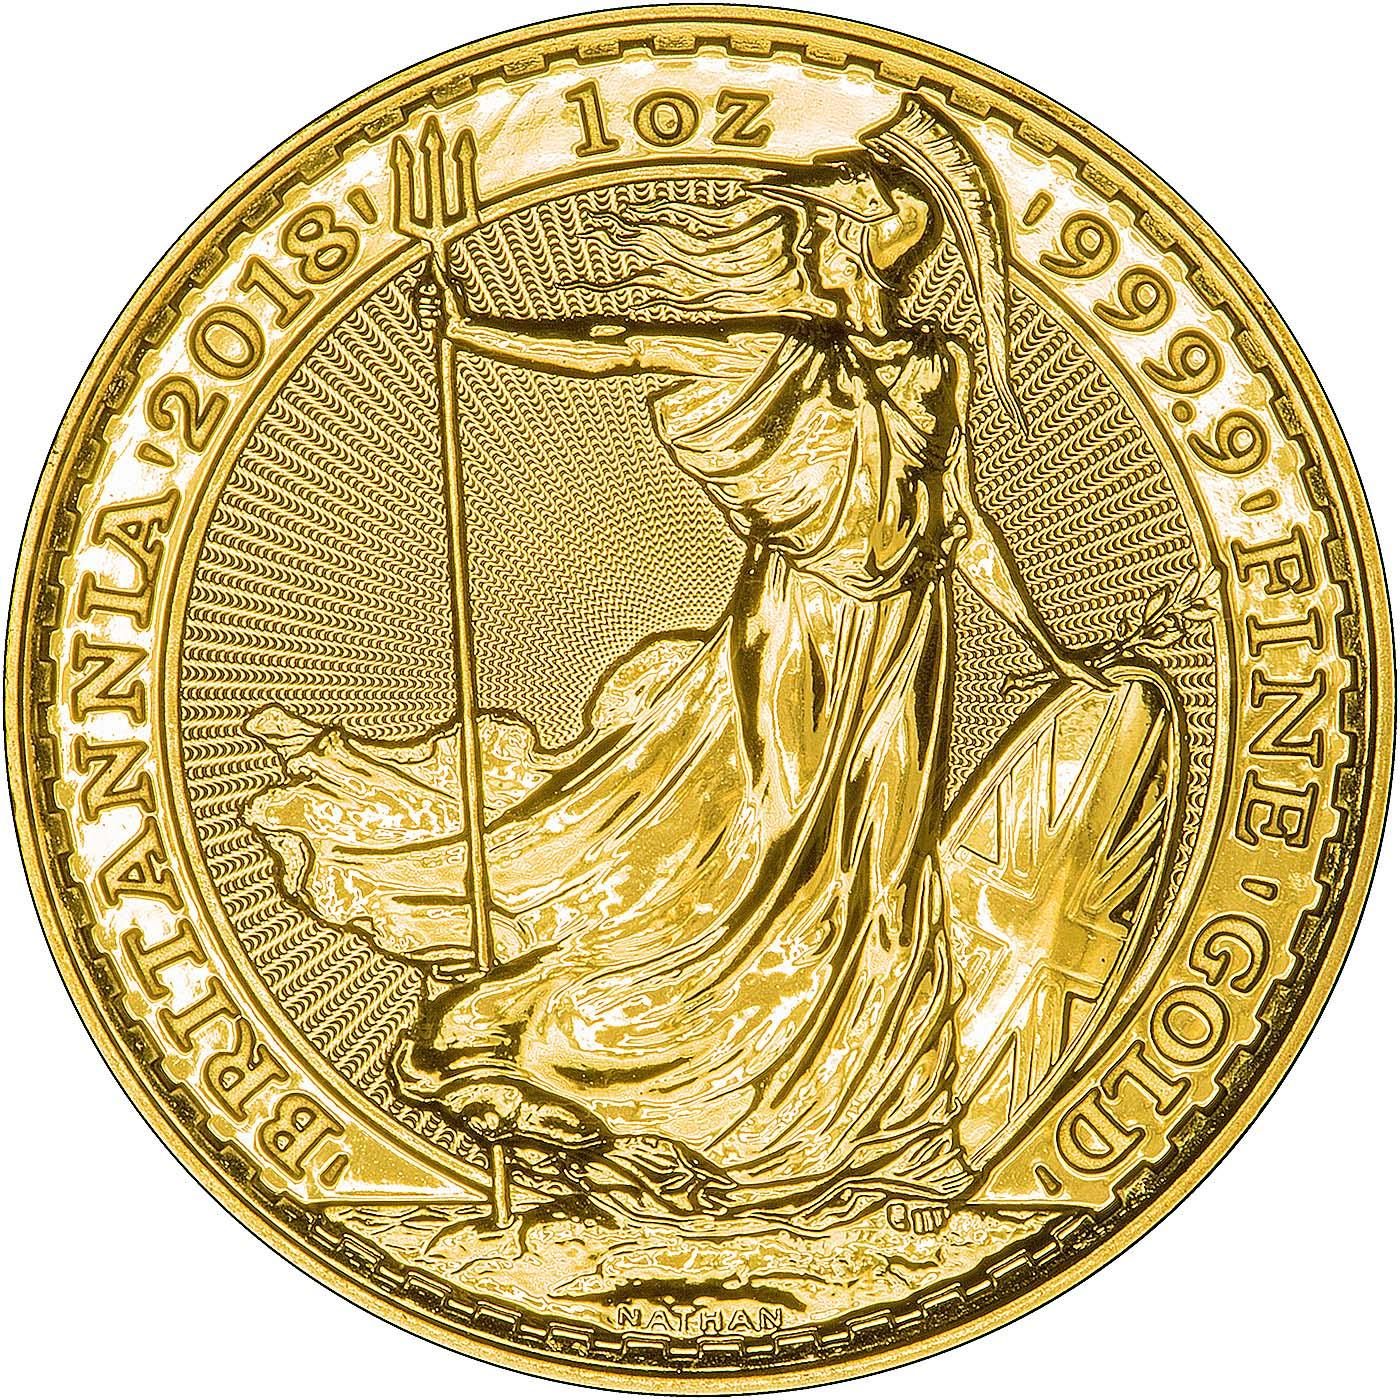 2018-gold-bullion-ungraded-1-ounce-britannia-coin-single-united-kingdom-the-royal-mint-1-8920174